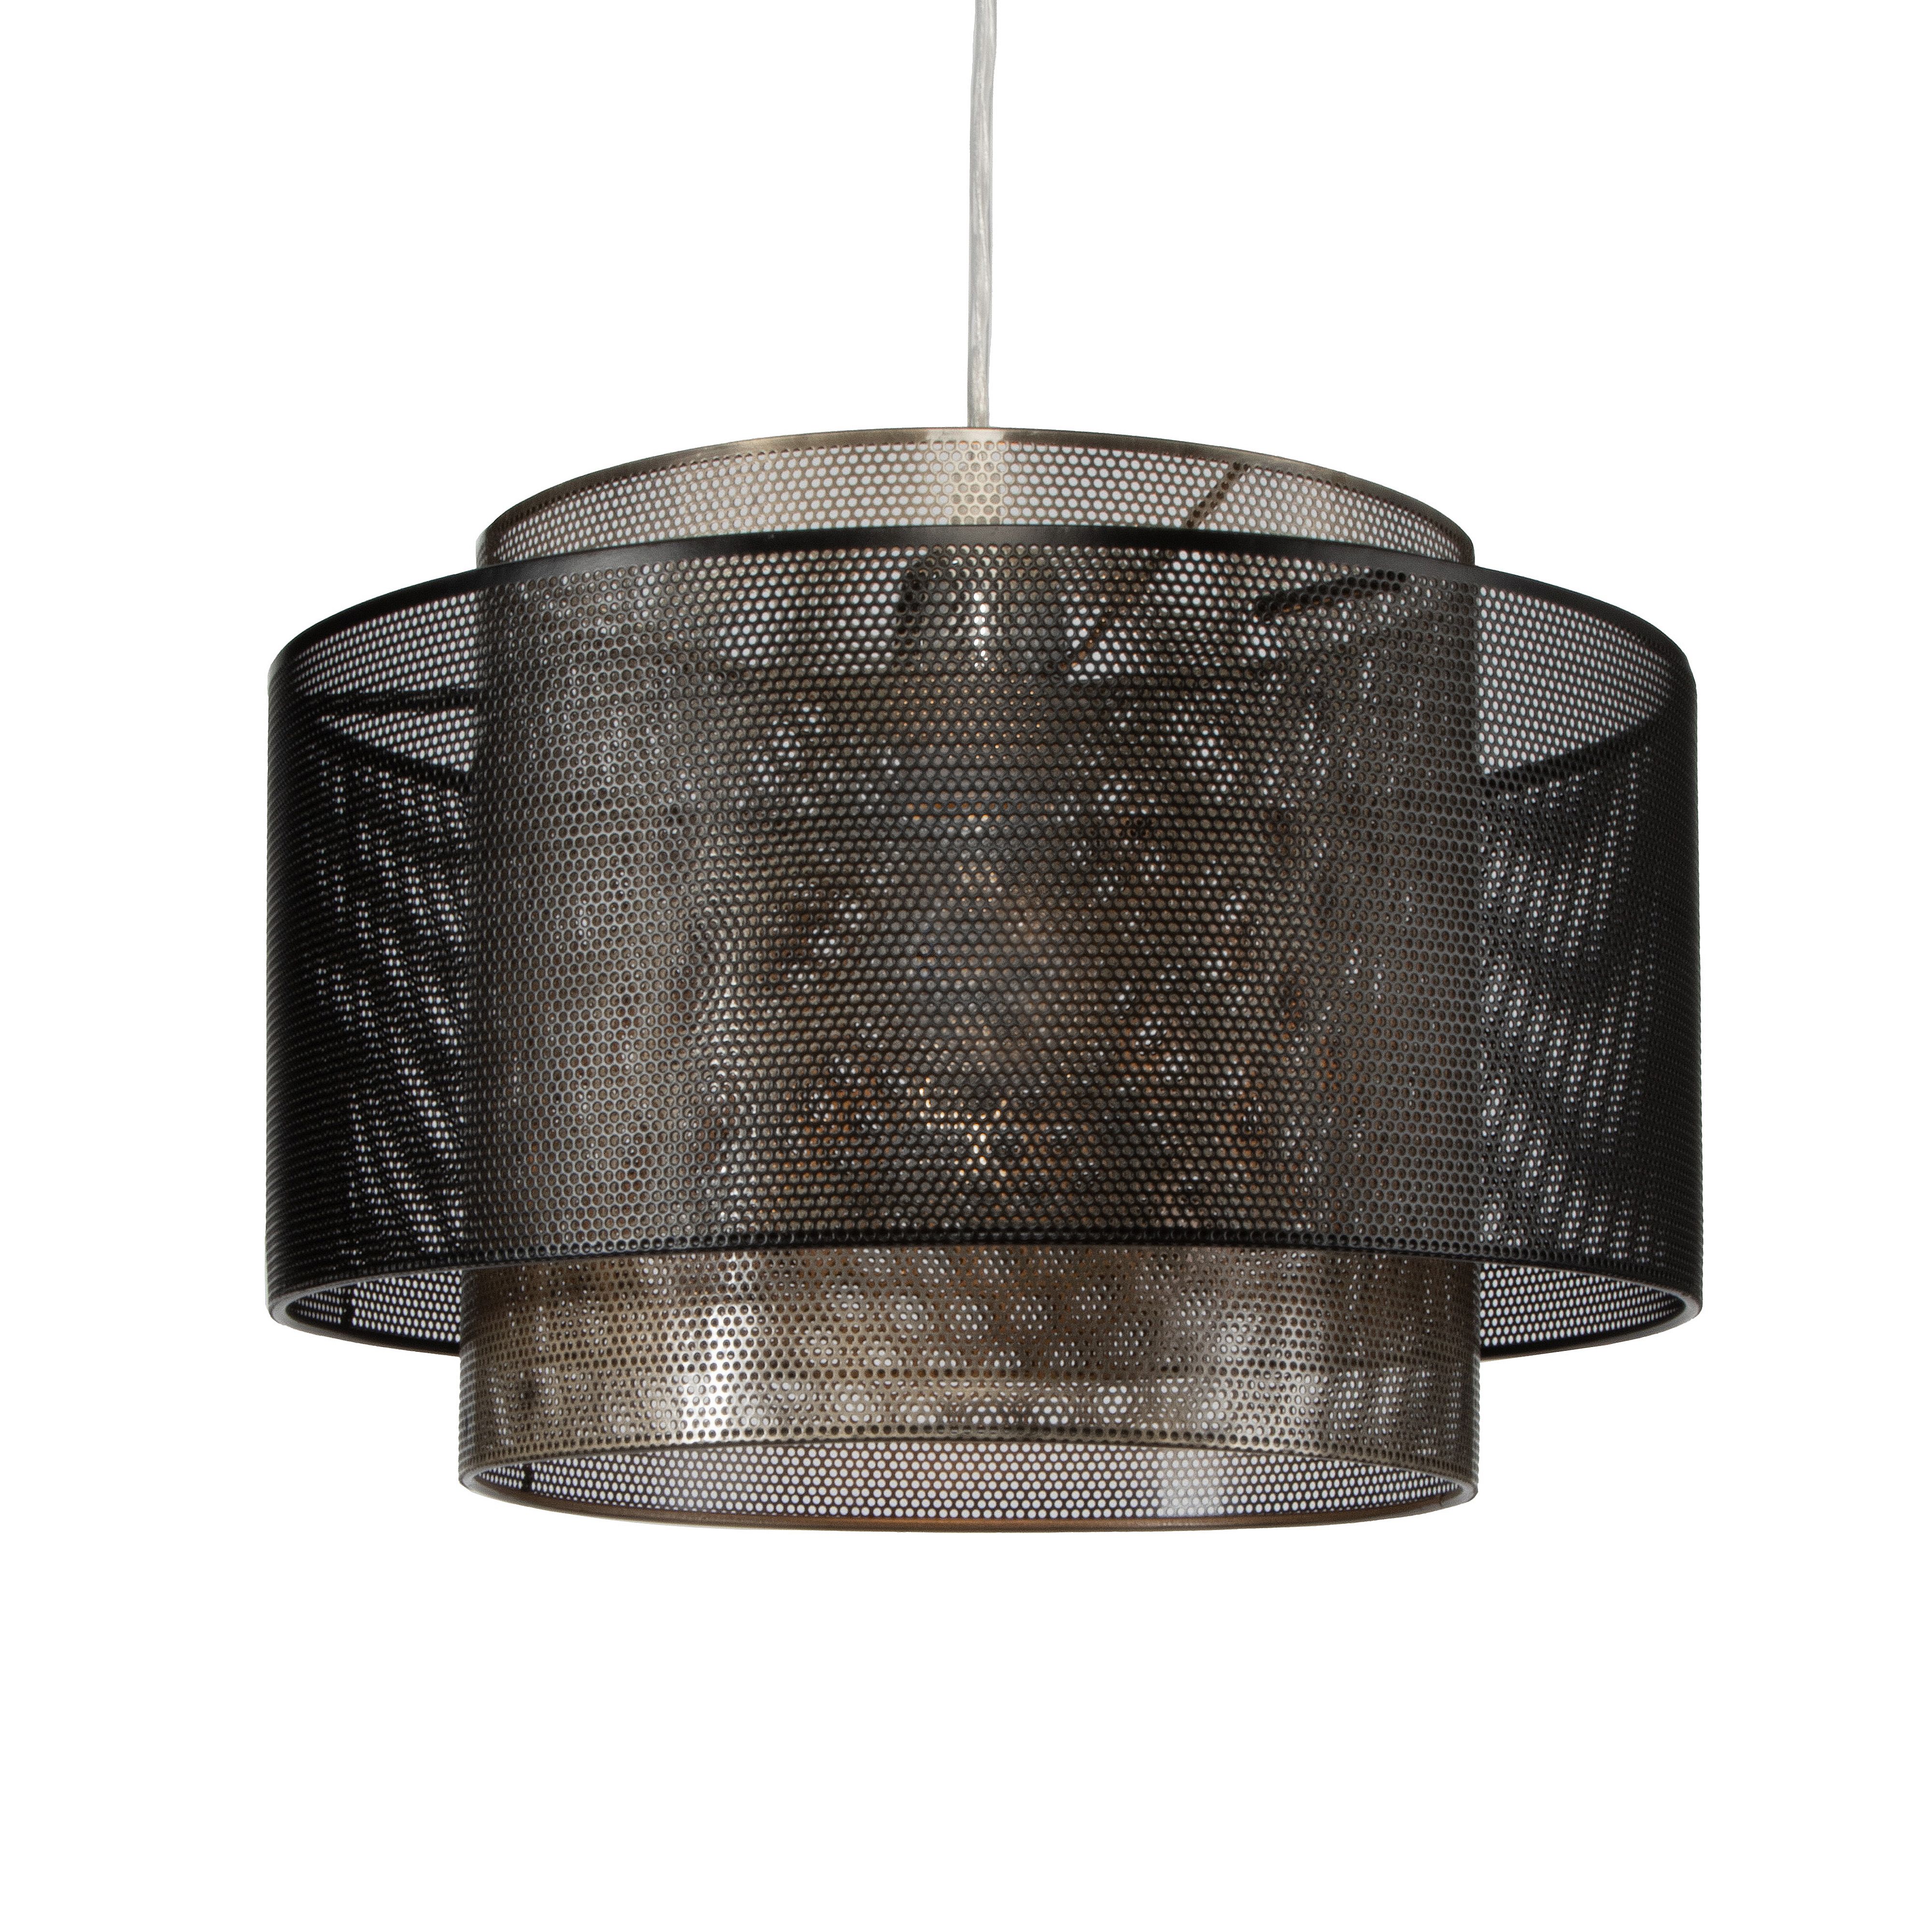 Inlight Black Mesh Layer Lamp shade (D)35cm